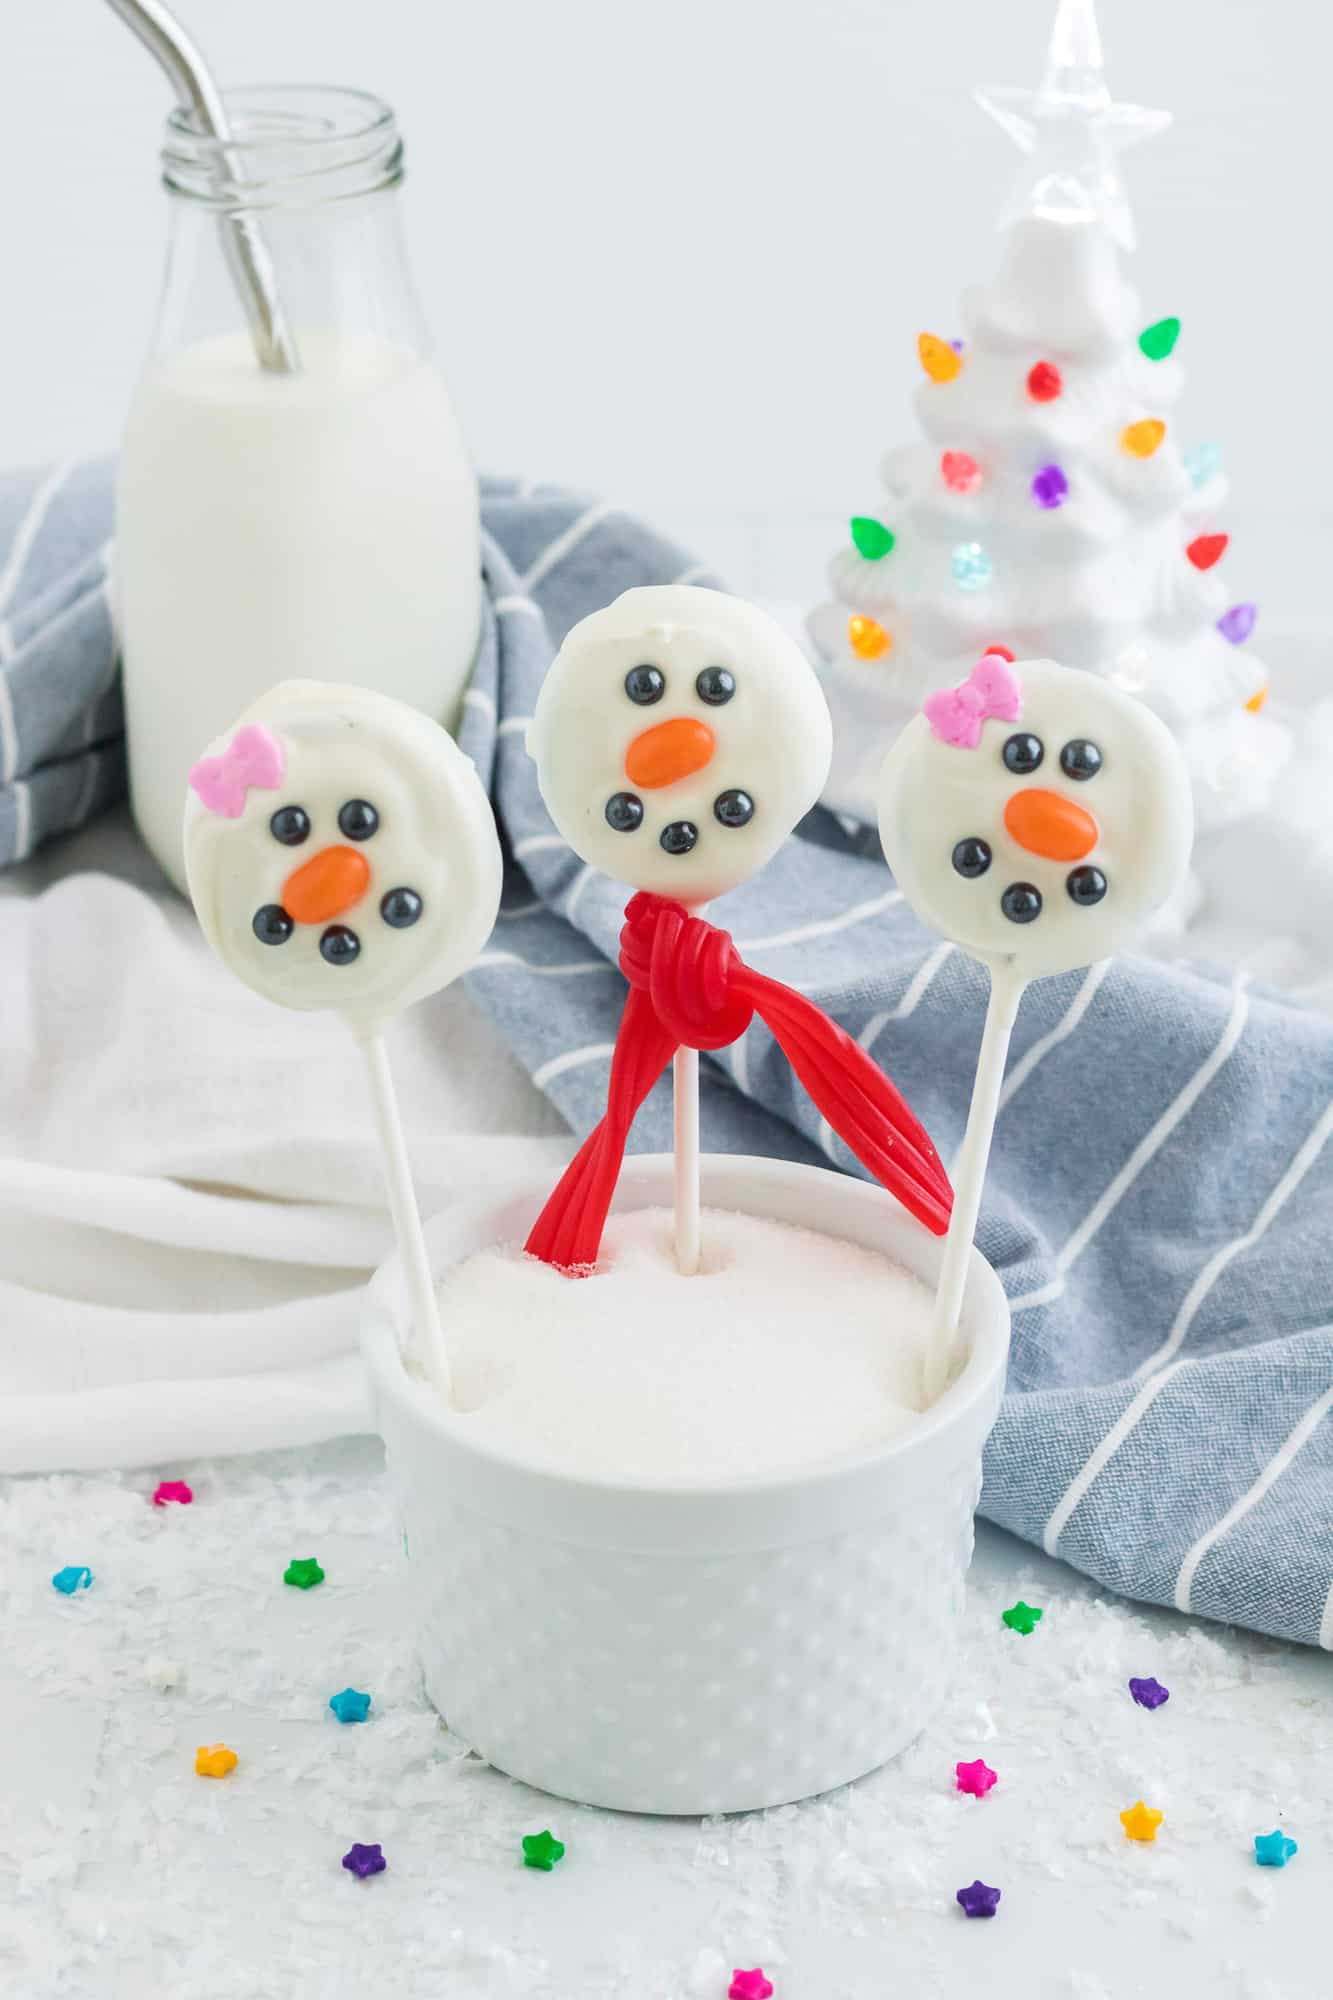 Snowmen pops in a cup of sugar.